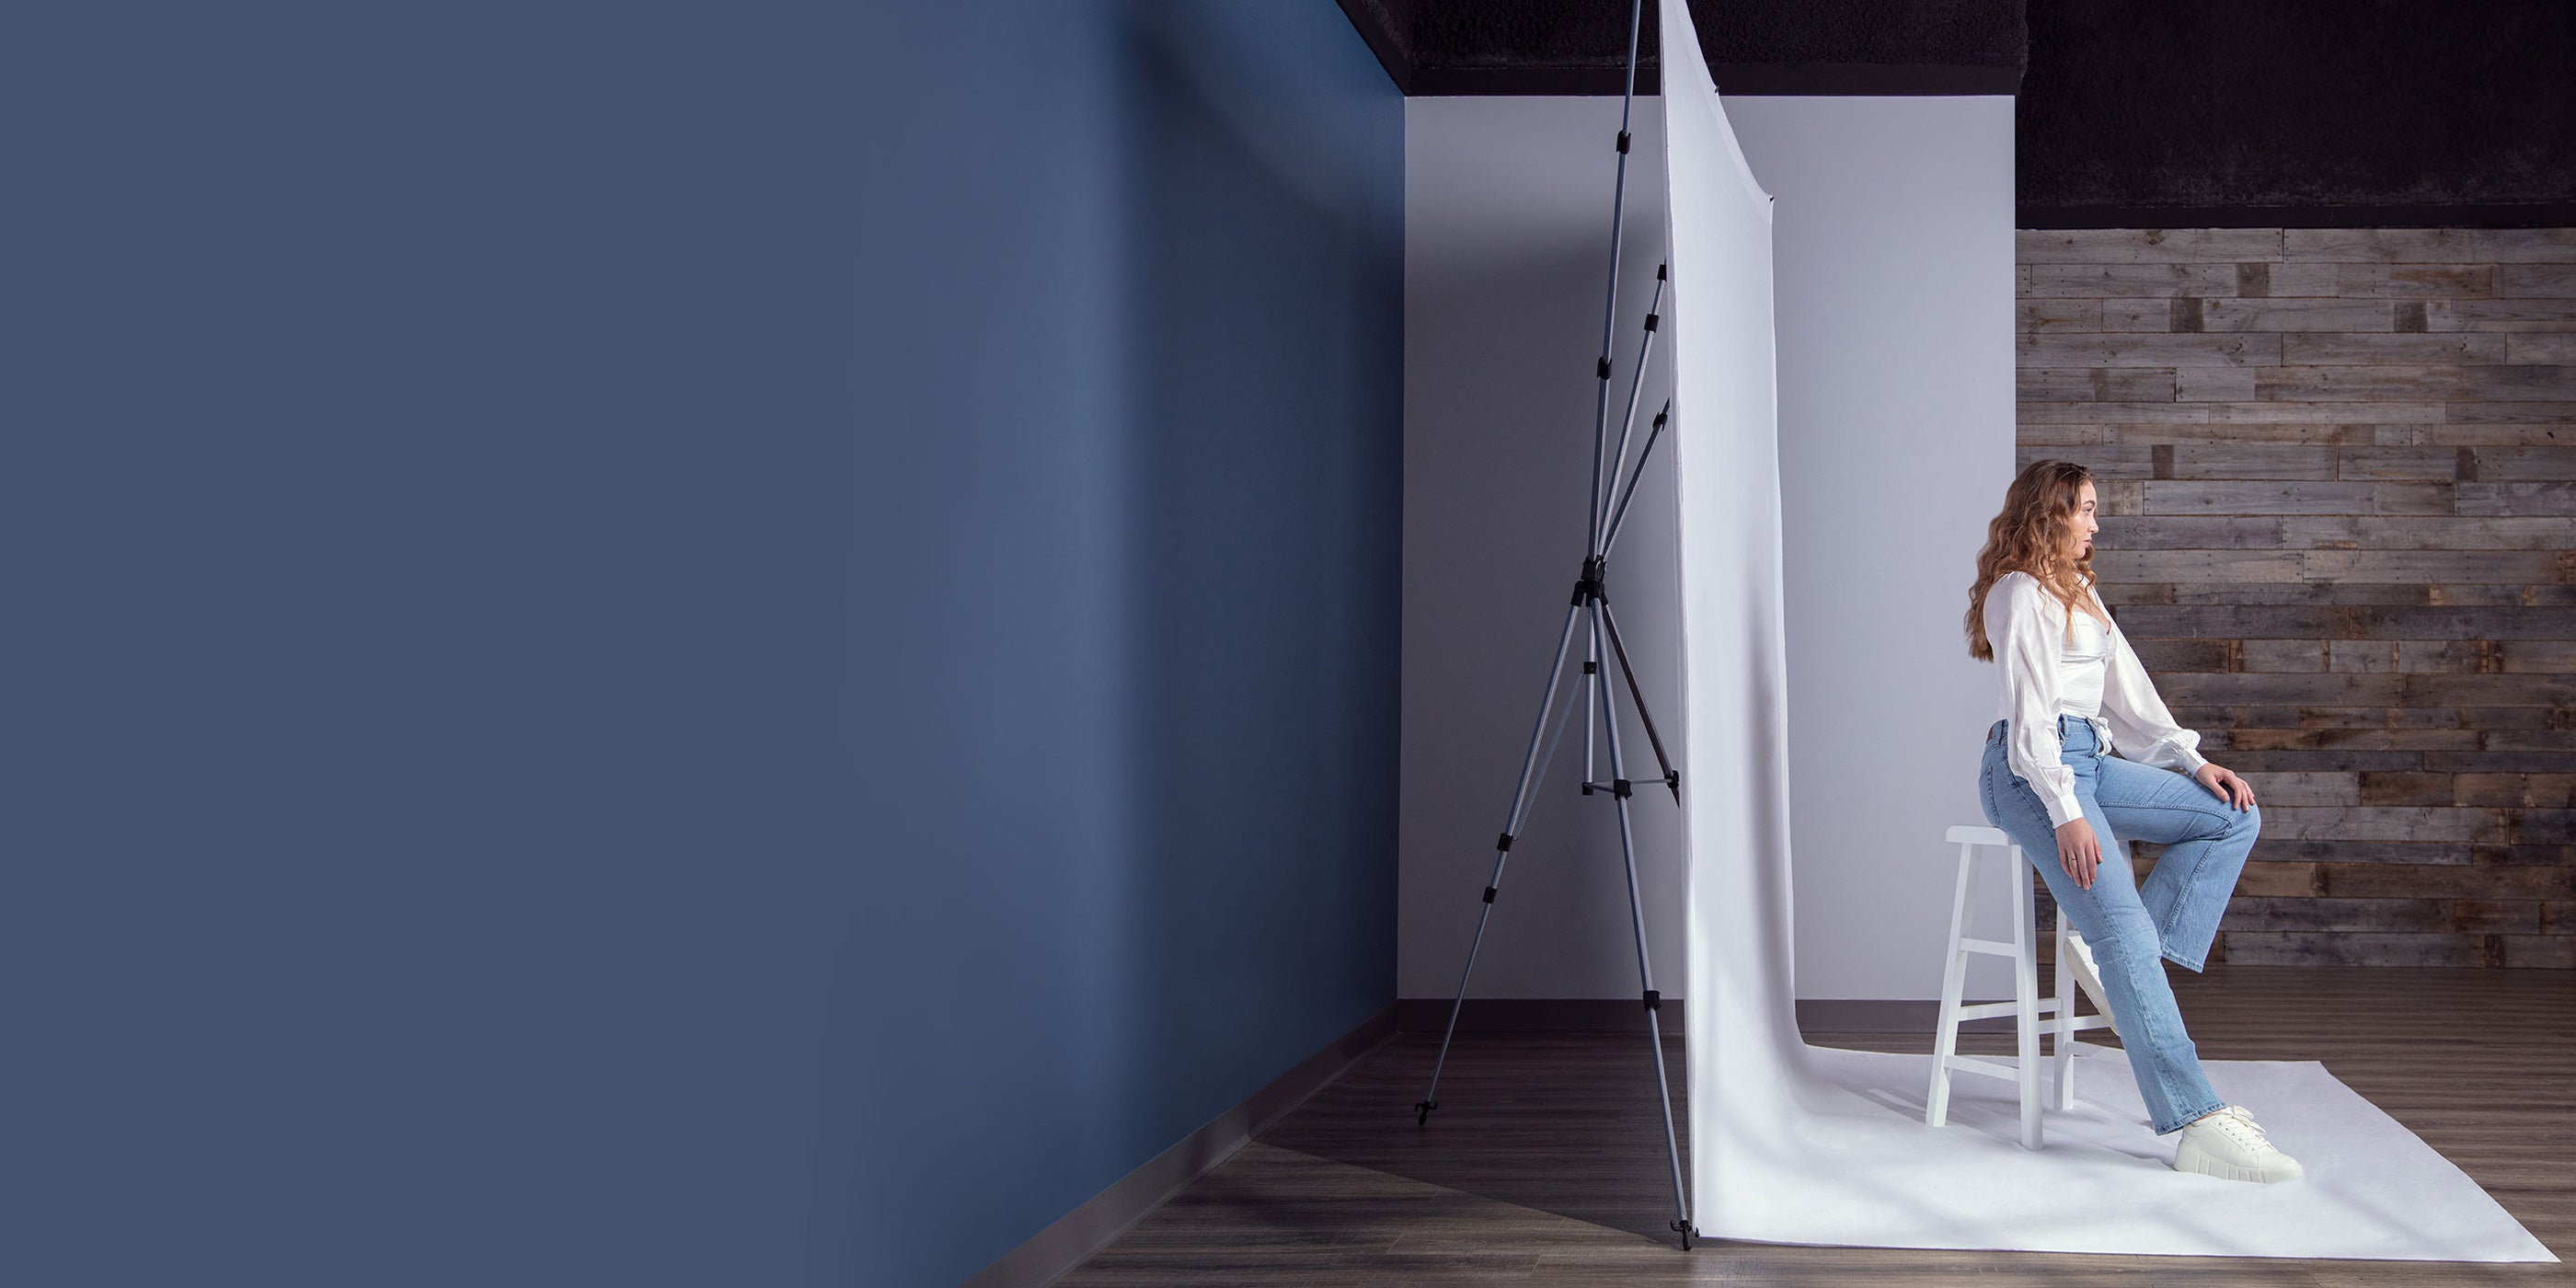 Portrait photo shoot using X-Drop Pro Backdrop Stand showing adjustable depth